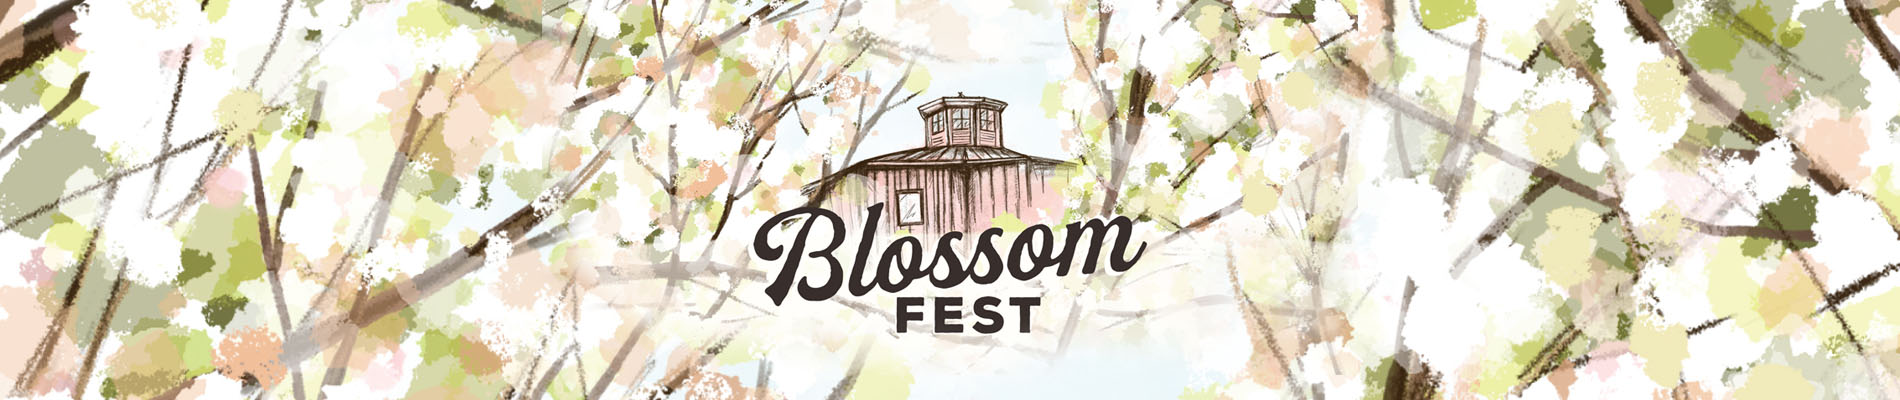 Blossom Fest